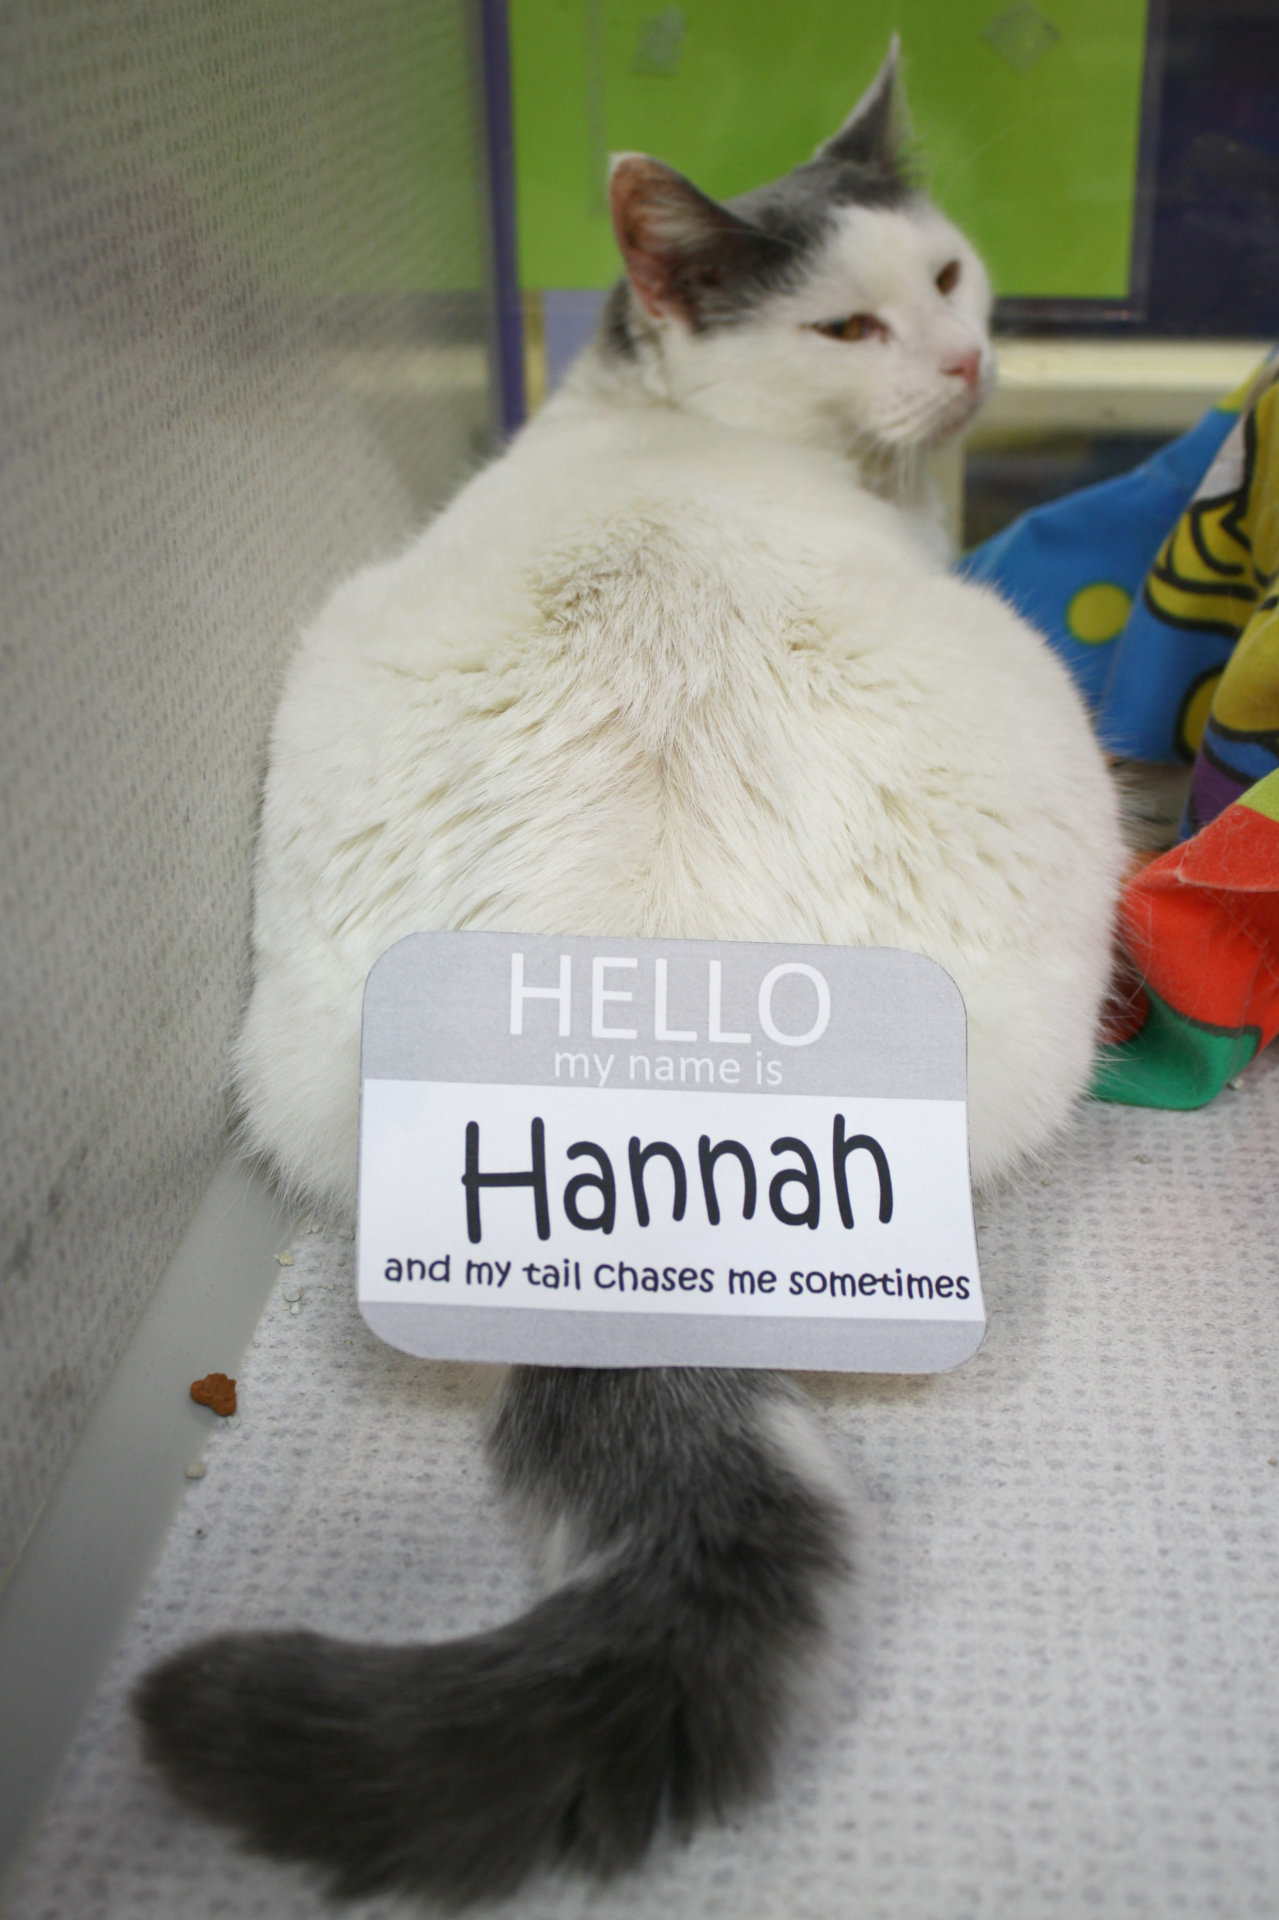 Hannah is an adoptable cat at the richmond spca cat